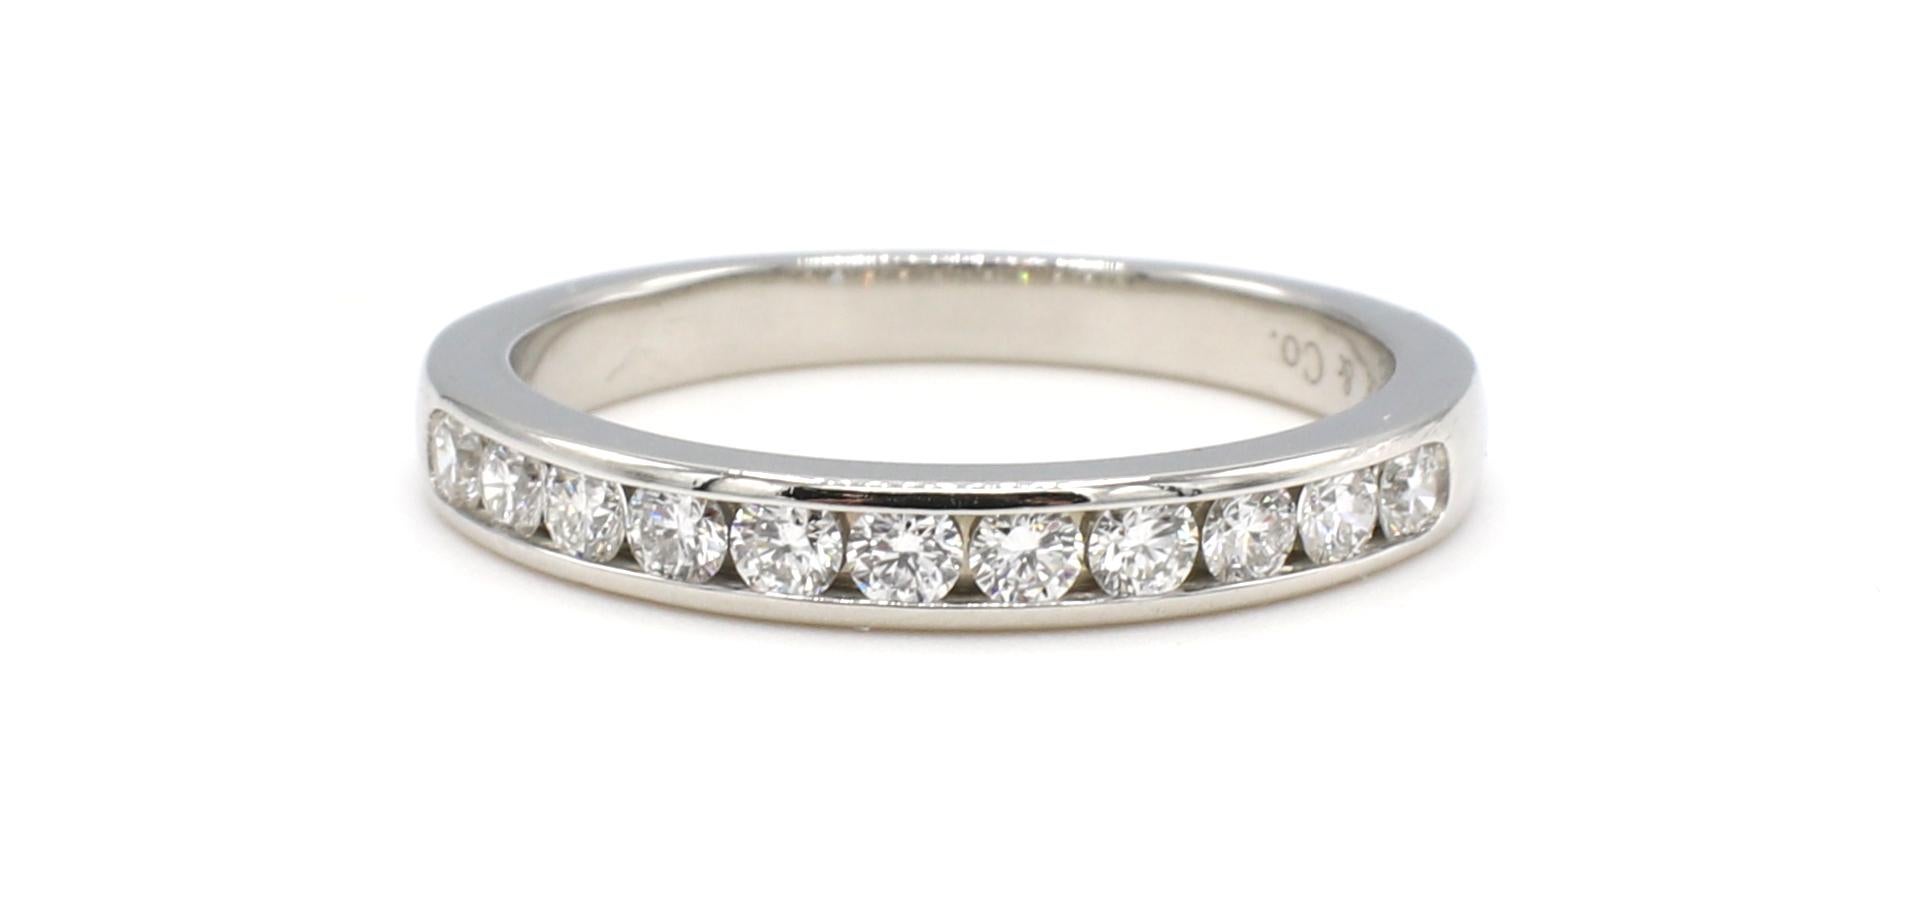 Tiffany & Co. Platinum Channel Set Diamond Wedding Band Ring 
Metal: Platinum
Weight: 4.49 grams
Diamonds: Approx. .55 CTW G VS round diamonds
Size: 7 (US)
Width: 3mm
Signed: Tiffany & Co. PT950
